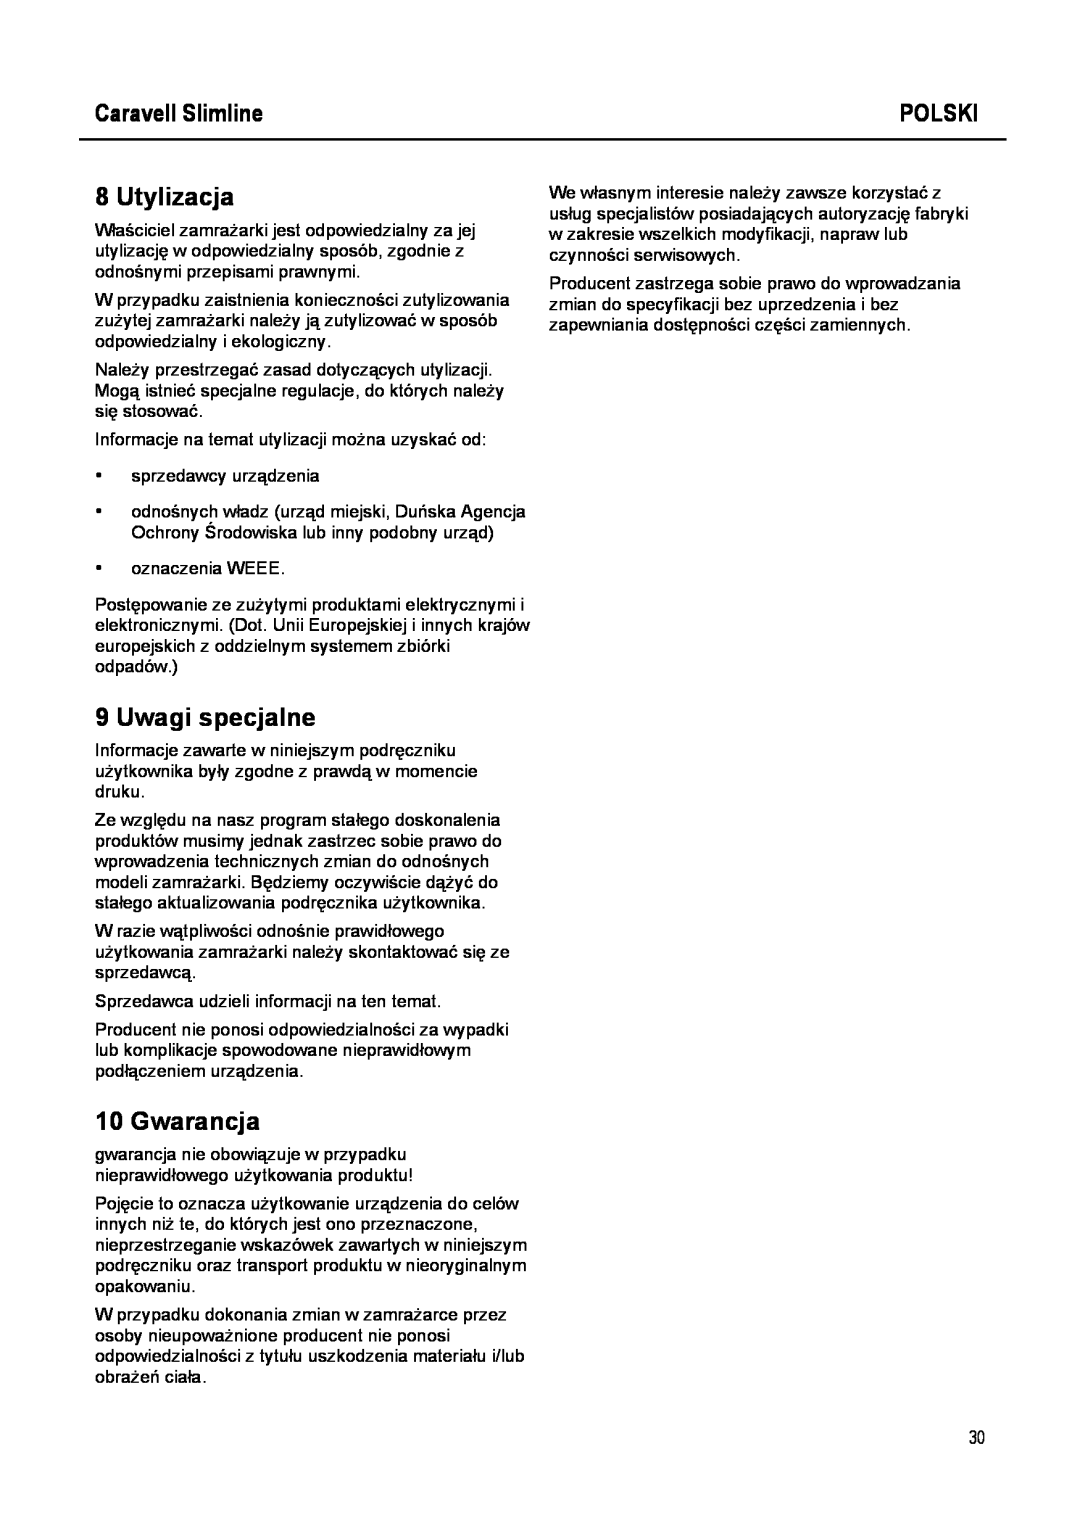 Caravell SLC 168 instruction manual Utylizacja, Uwagi specjalne, Gwarancja, Caravell Slimline, Polski 